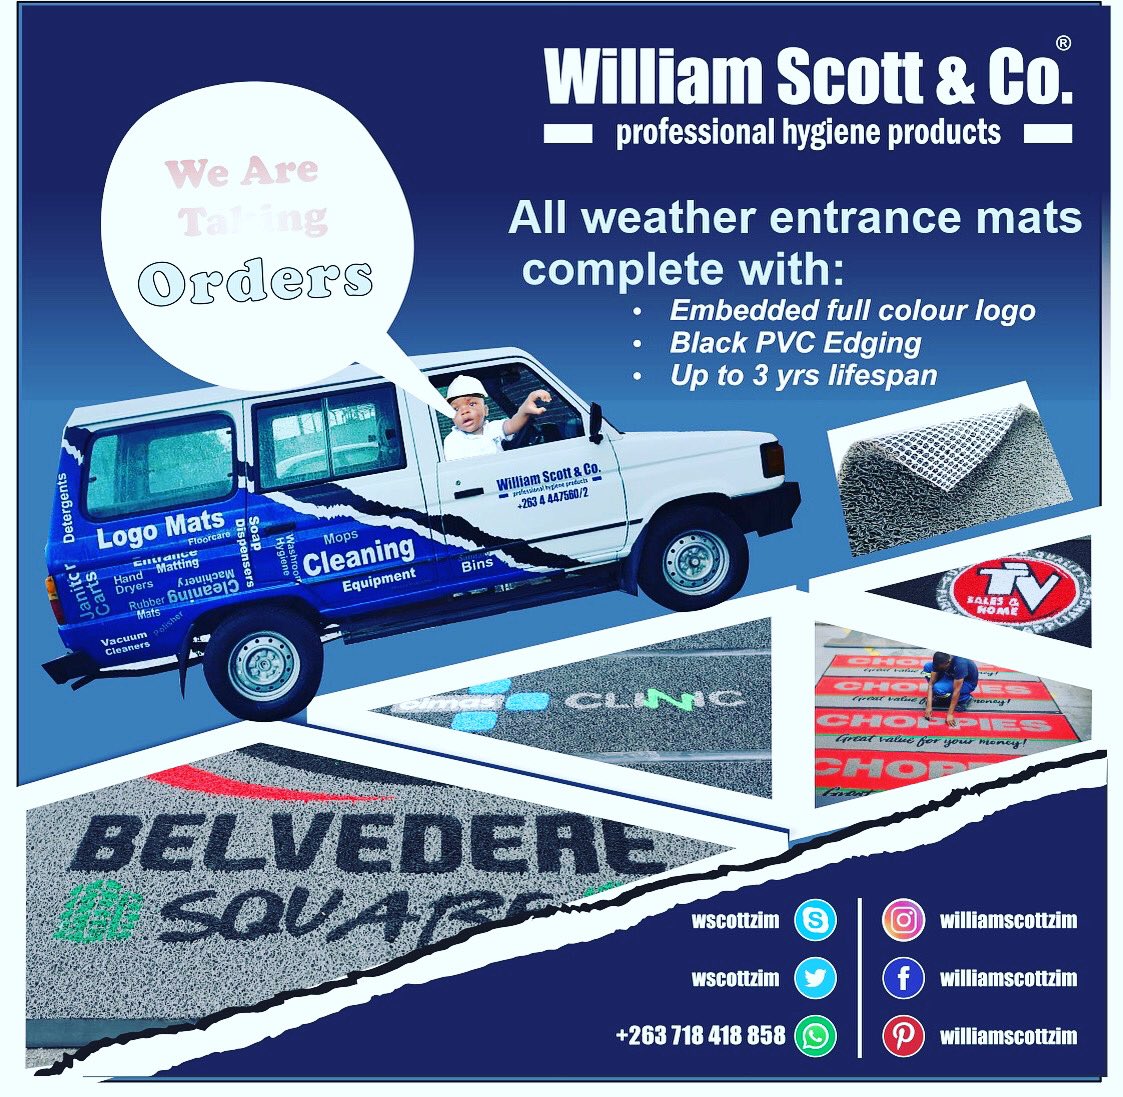 We are taking orders!

Order your branded door mat now!
#williamscott
#hygieneredefined
#cleansurfaces
#brandedmats
#entrancemats
#floorcare
#staysafe